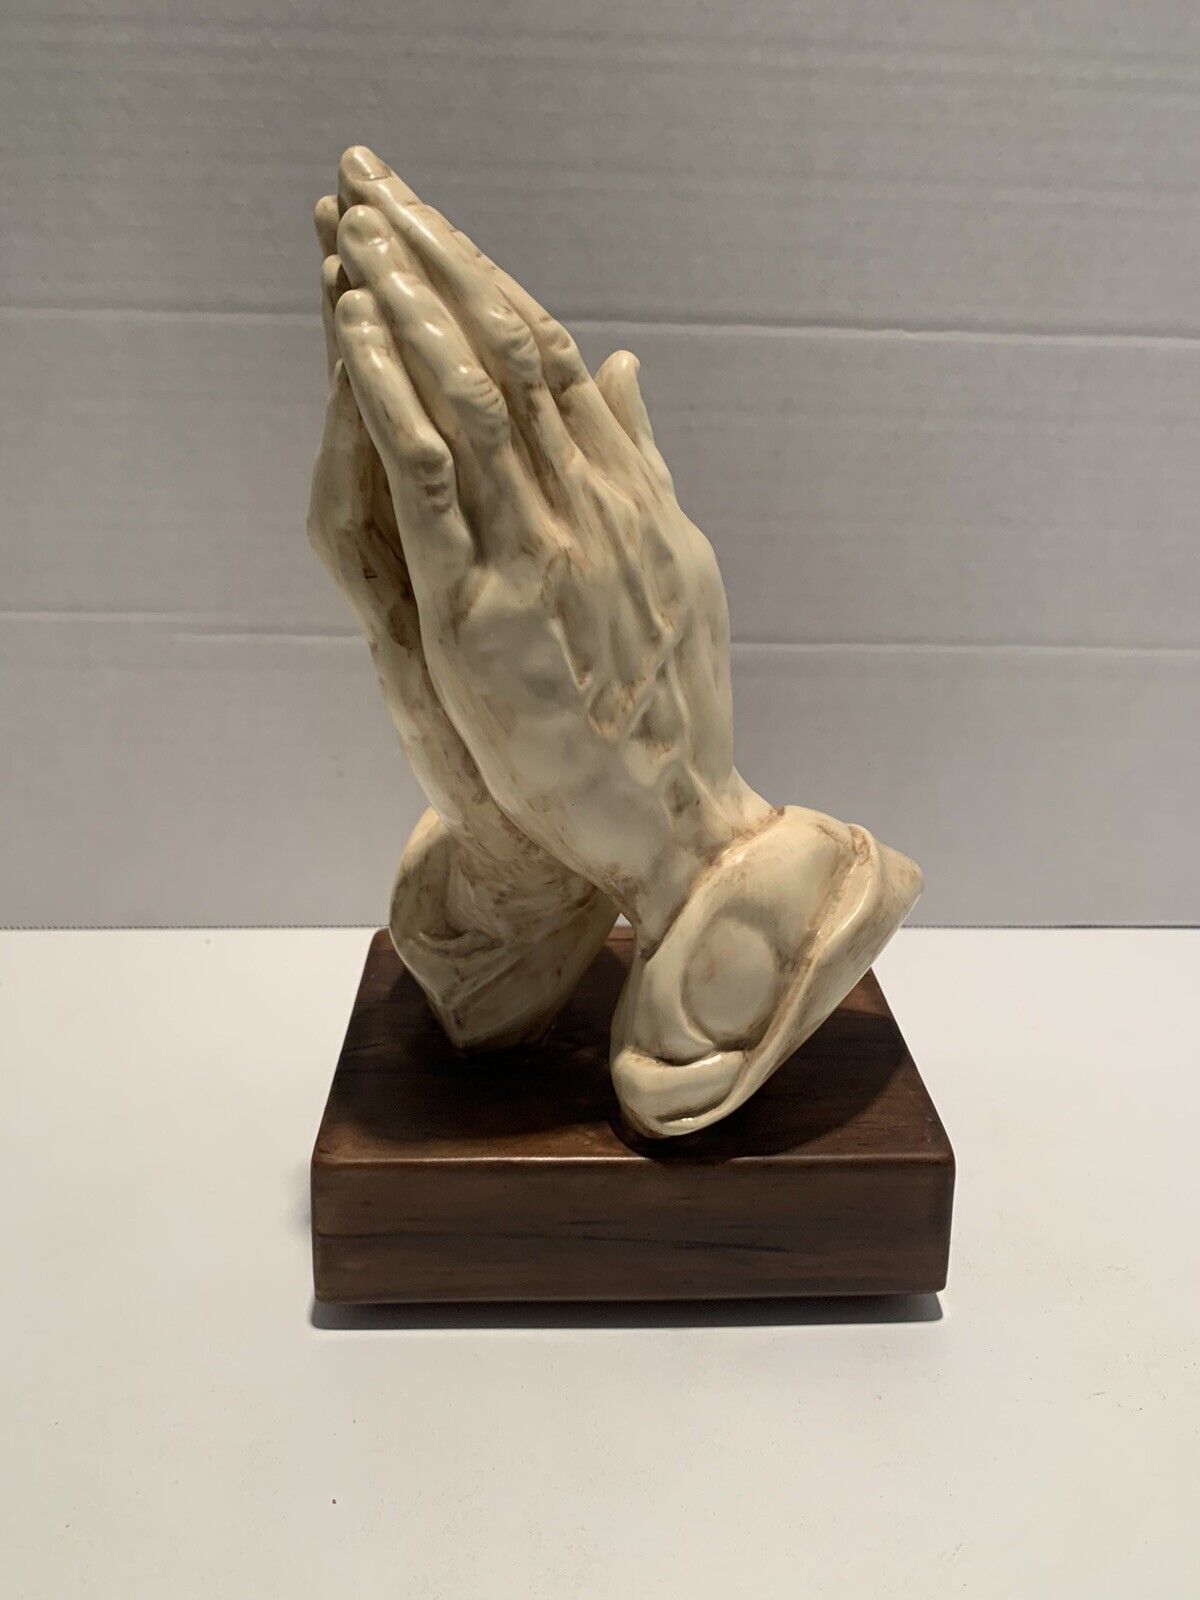 Praying Hands I Believe Ceramic Sculpture 